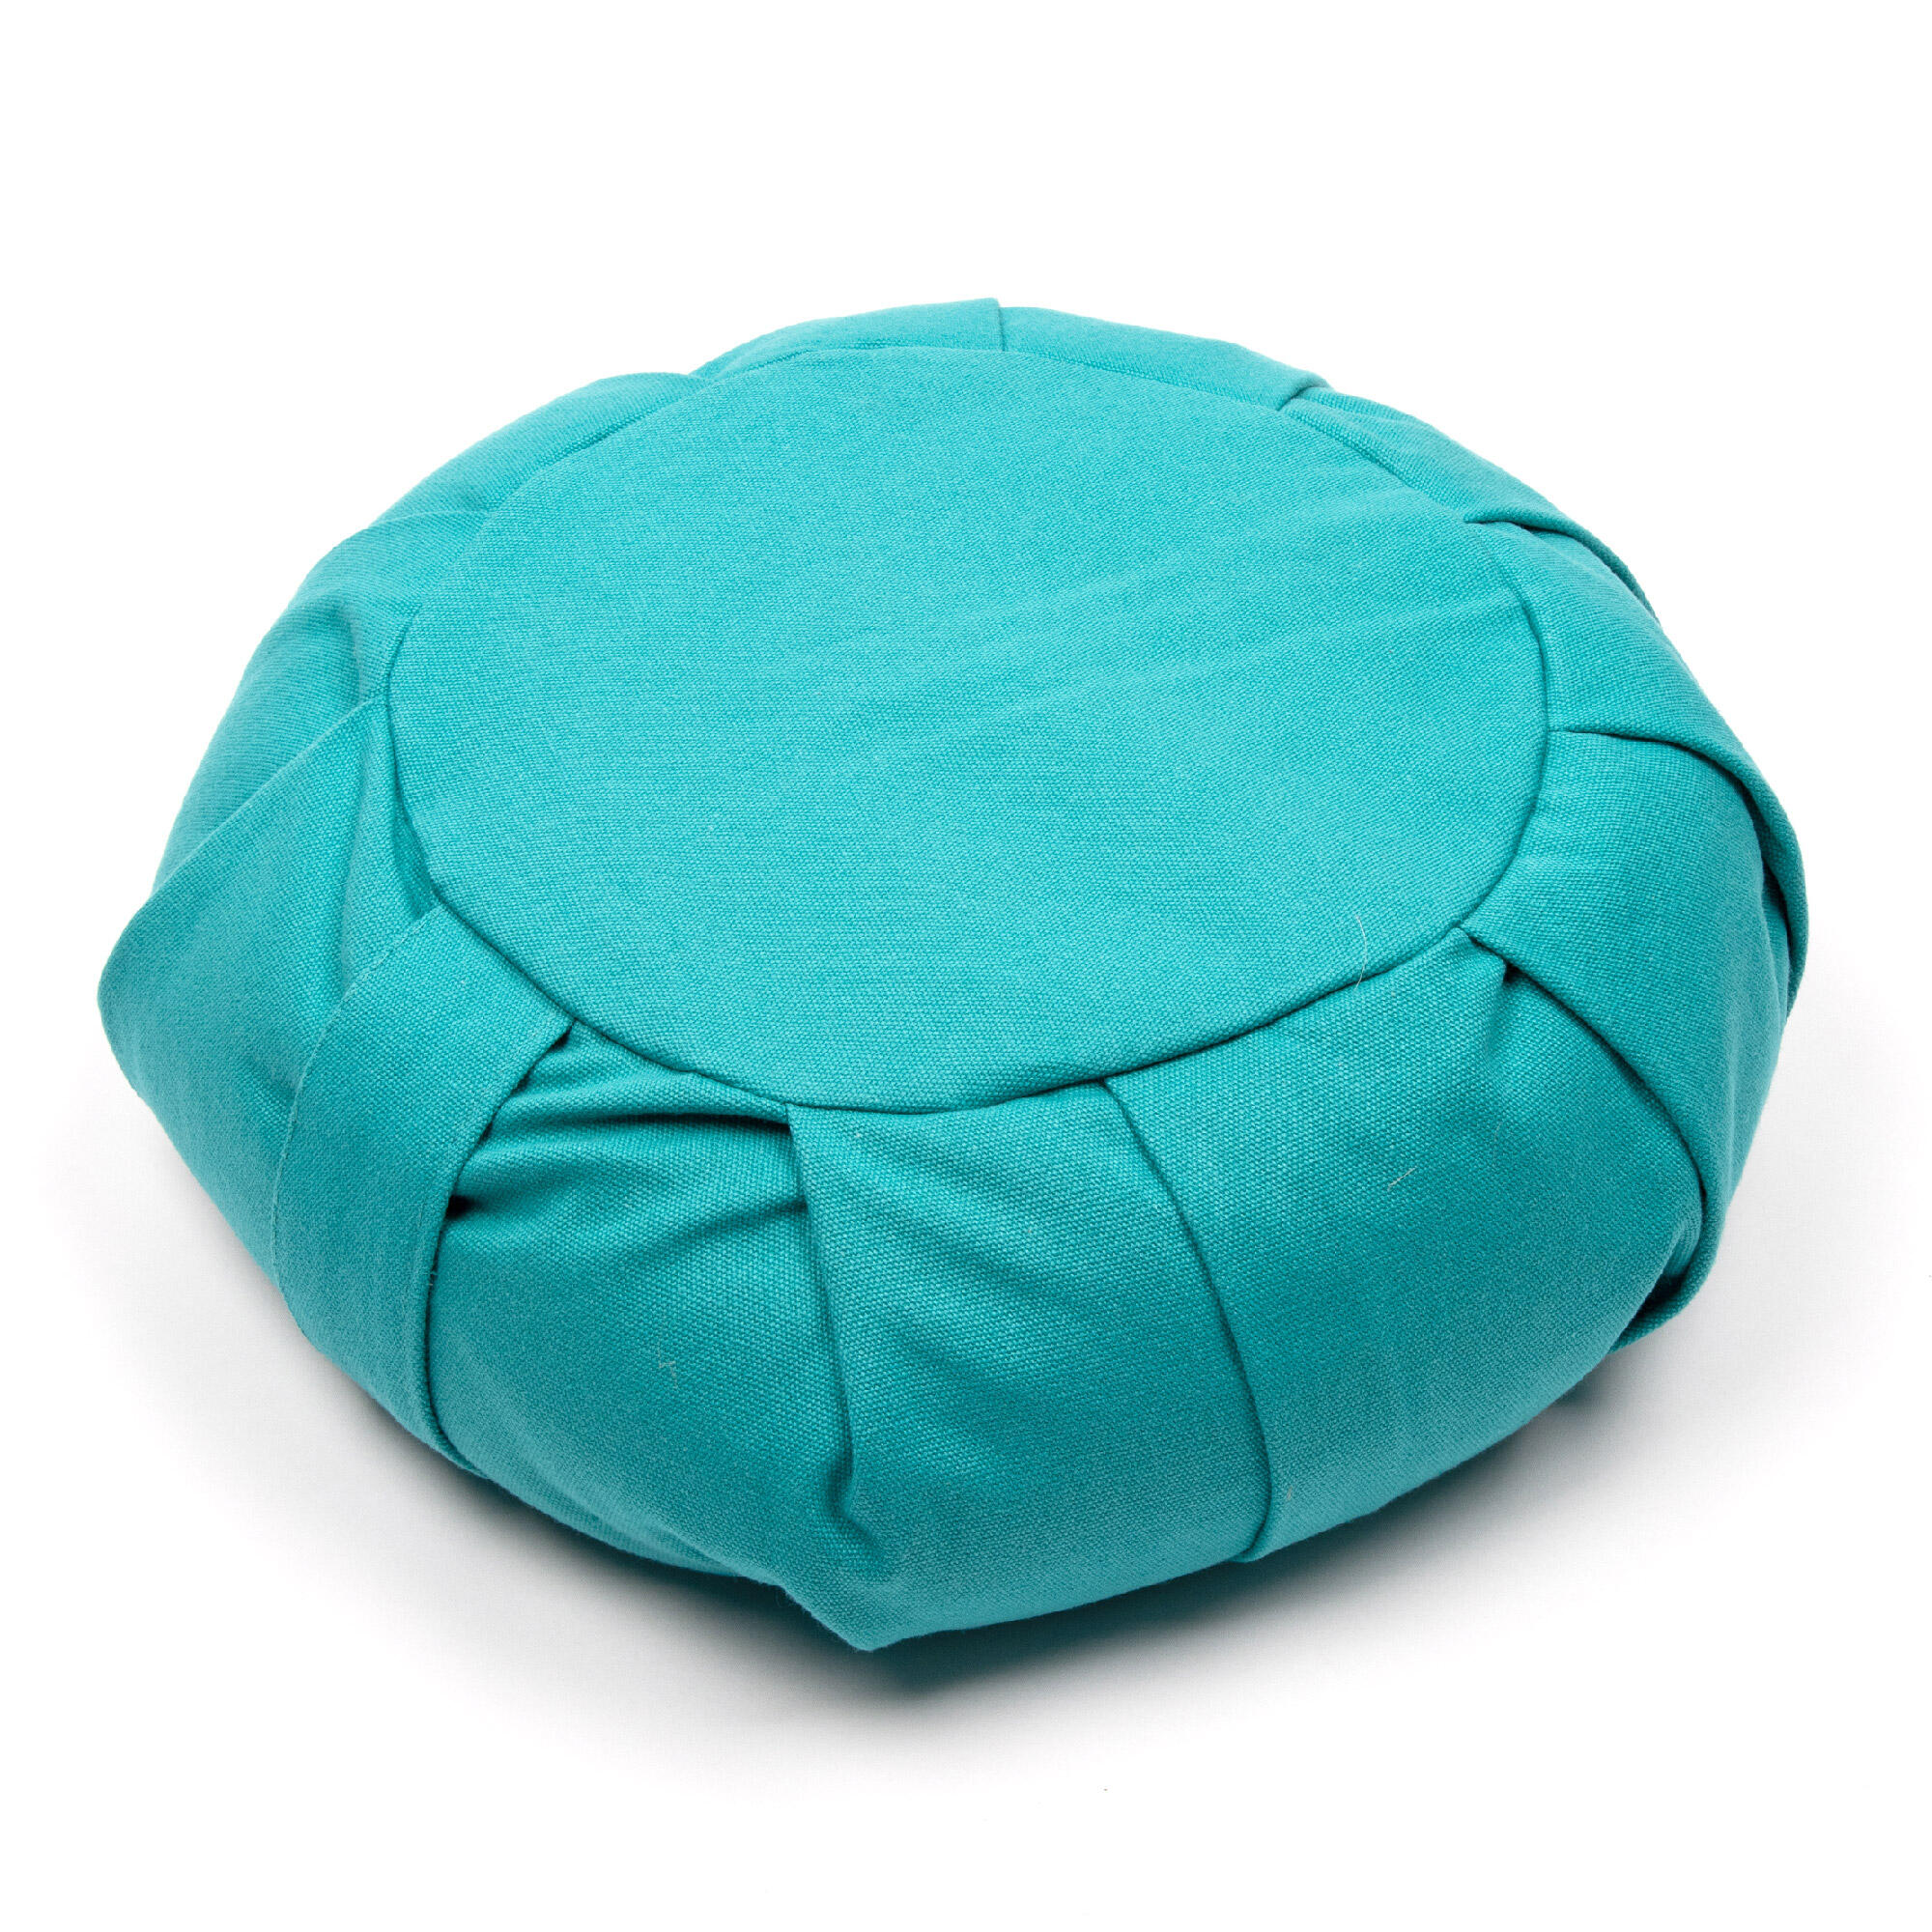 MYGA Myga Zafu Meditation Cushion - Turquoise